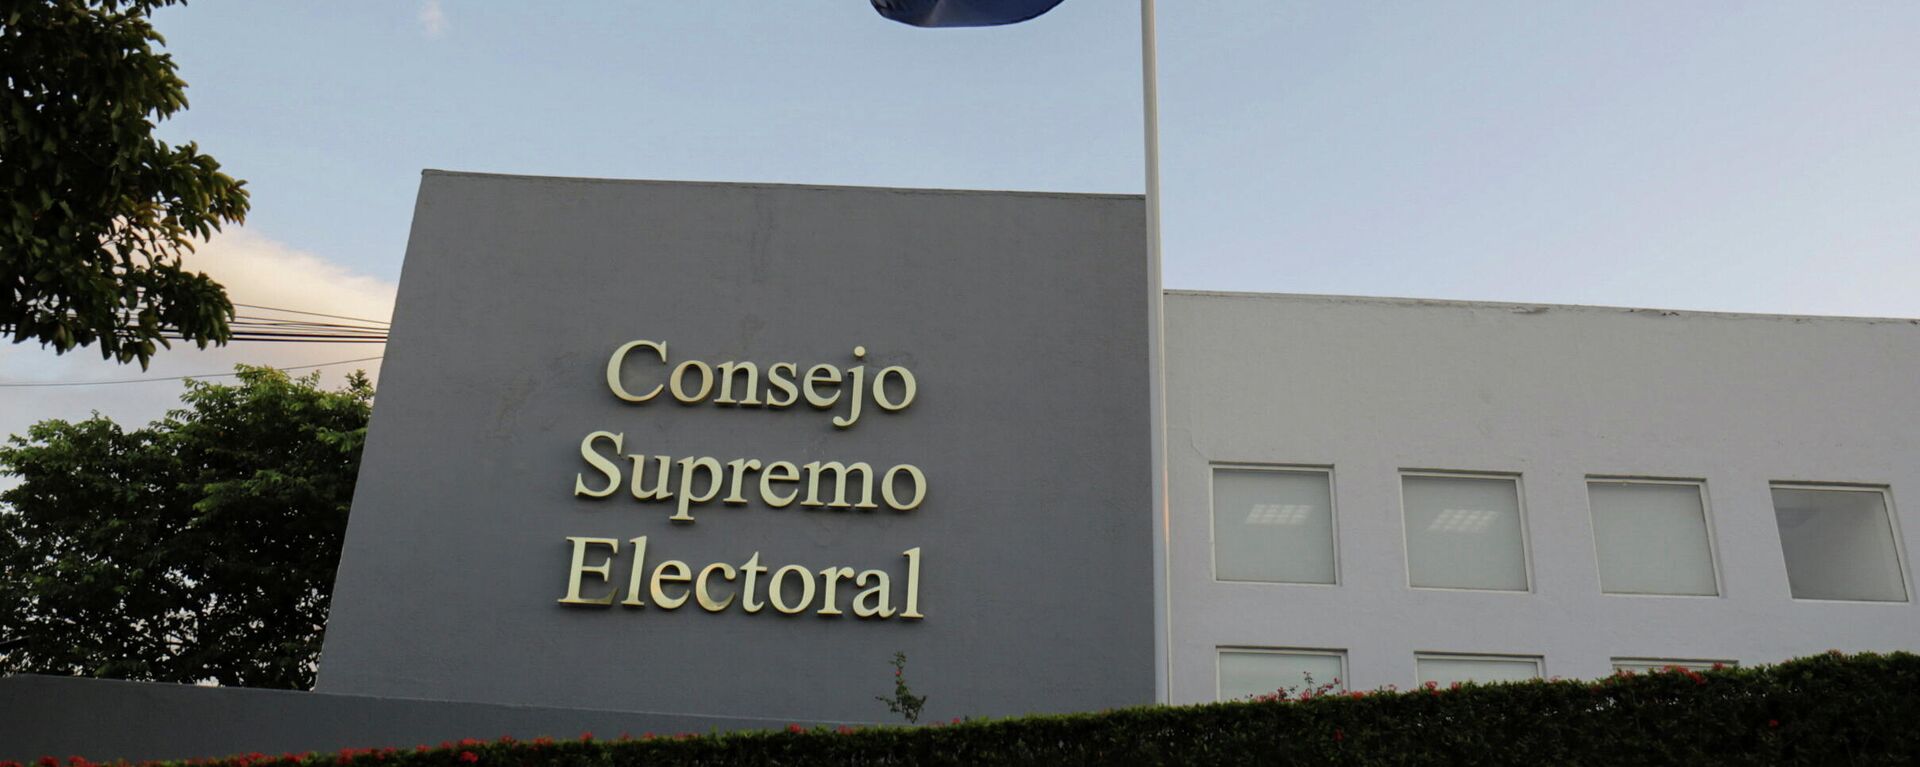 Consejo Supremo Electoral de Nicaragua - Sputnik Mundo, 1920, 07.11.2021